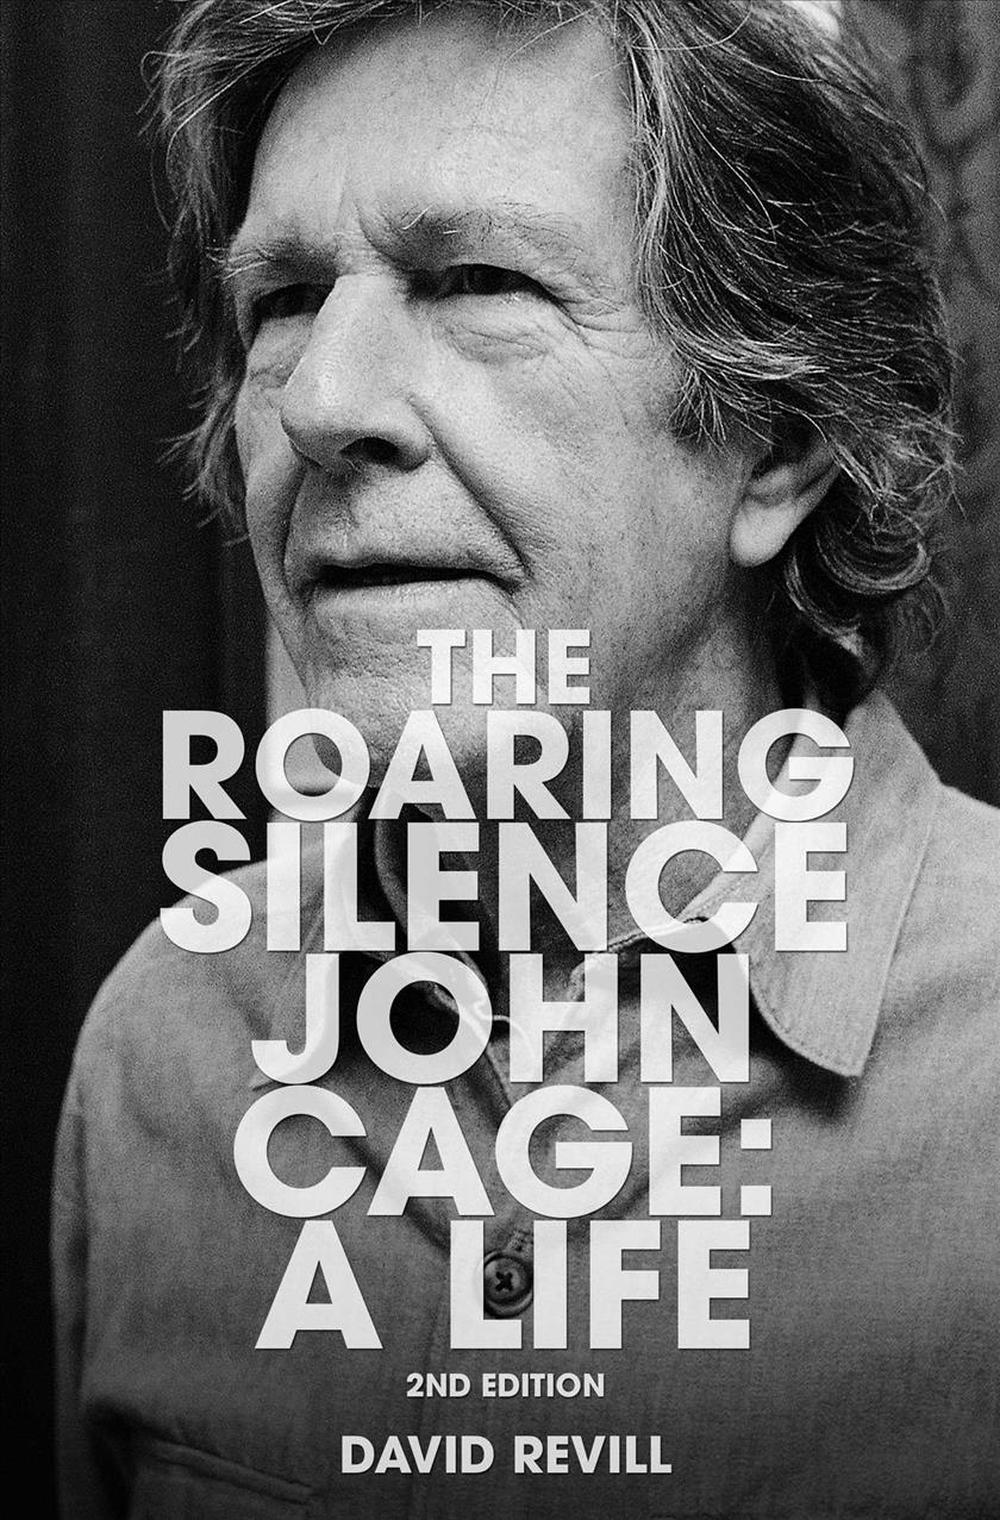 The Roaring Silence: John Cage: A Life by David Revill (English) Paperback Book 9781611457308 | eBay